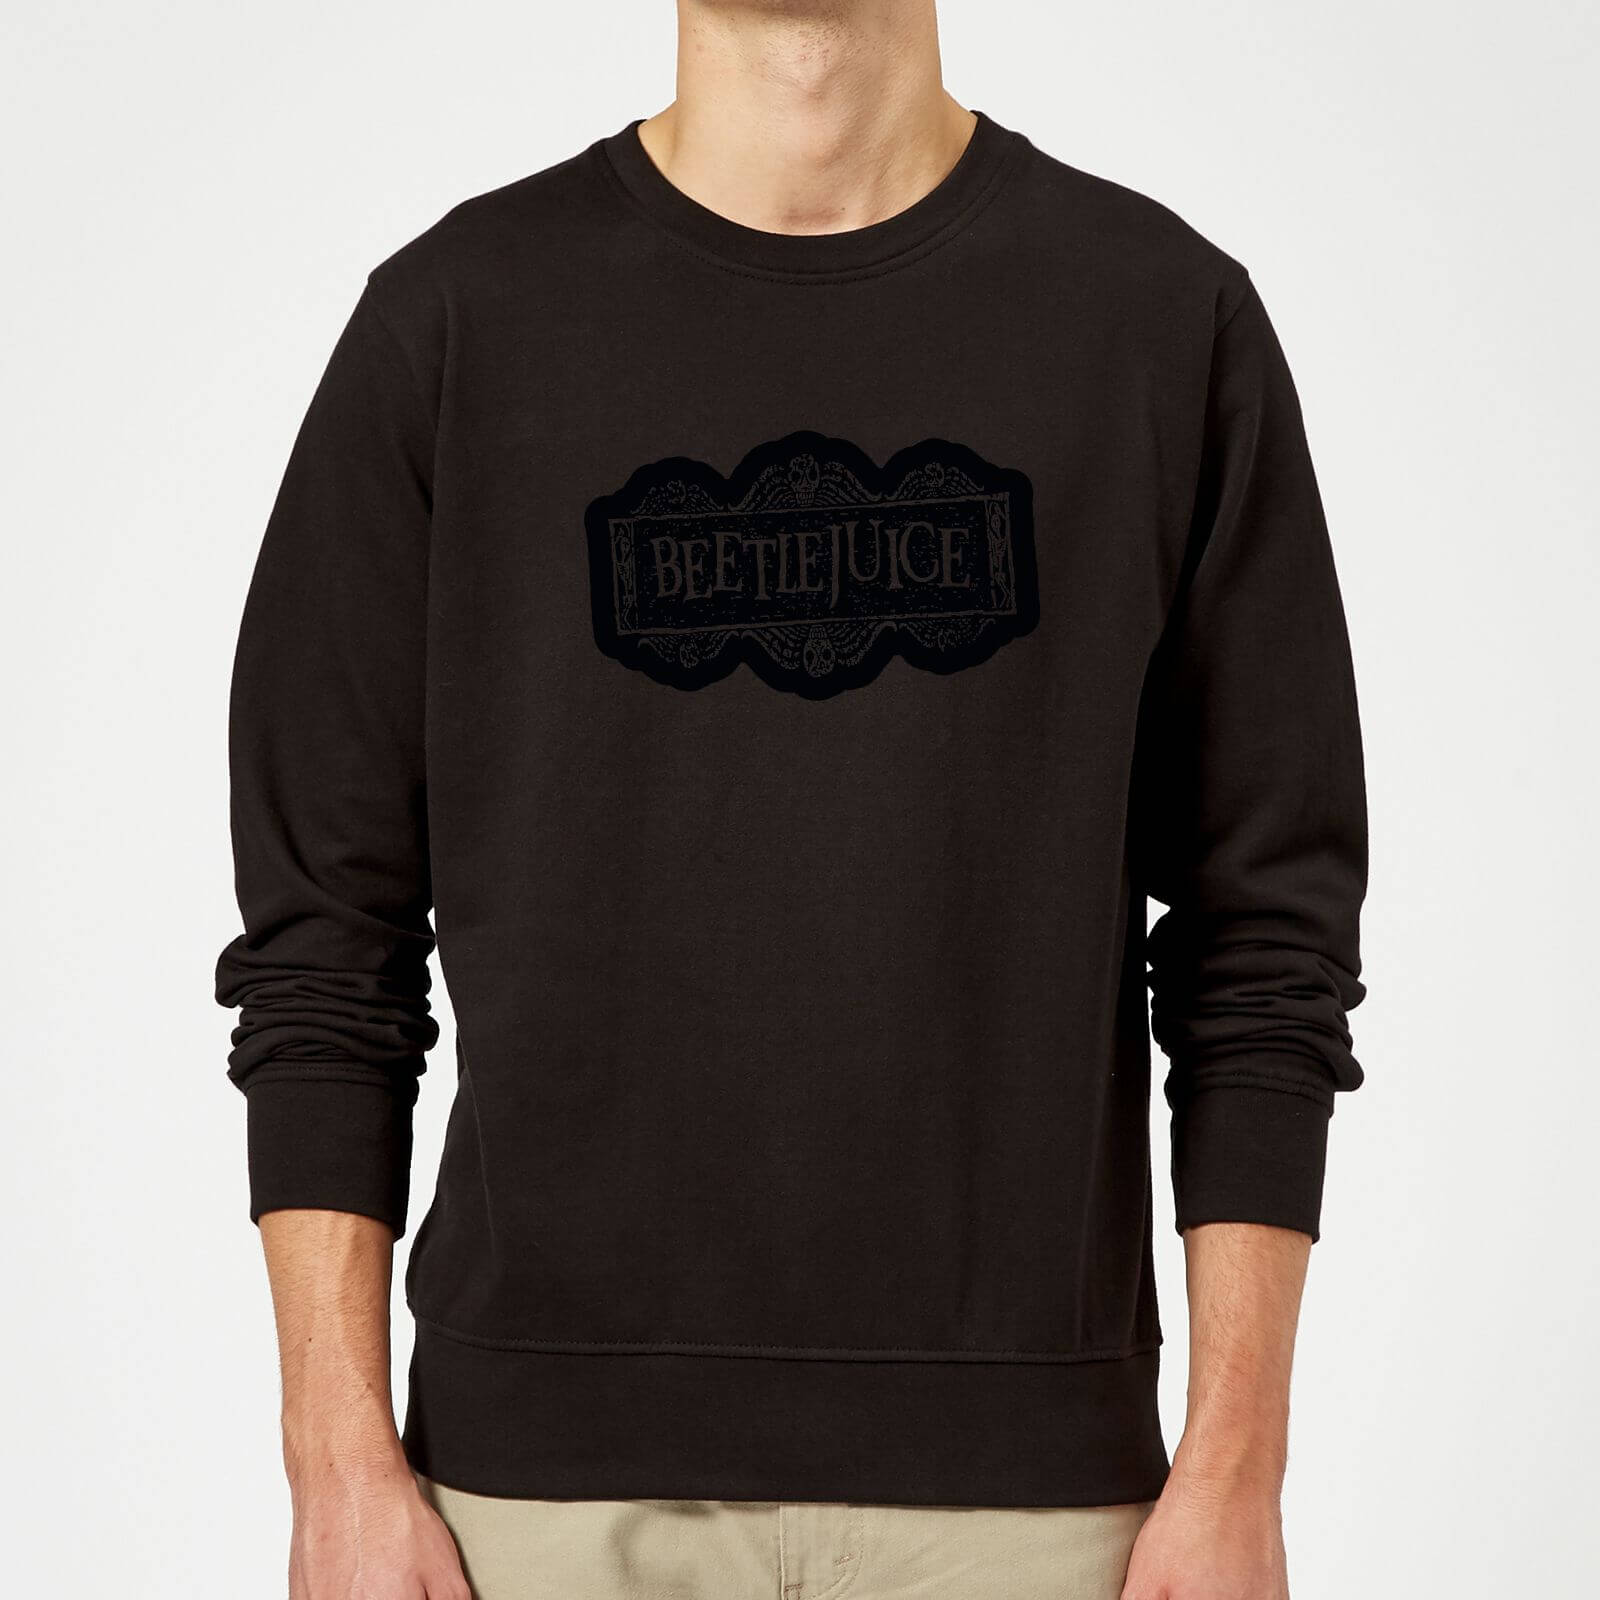 Beetlejuice Black Logo Sweatshirt - Black - 5XL